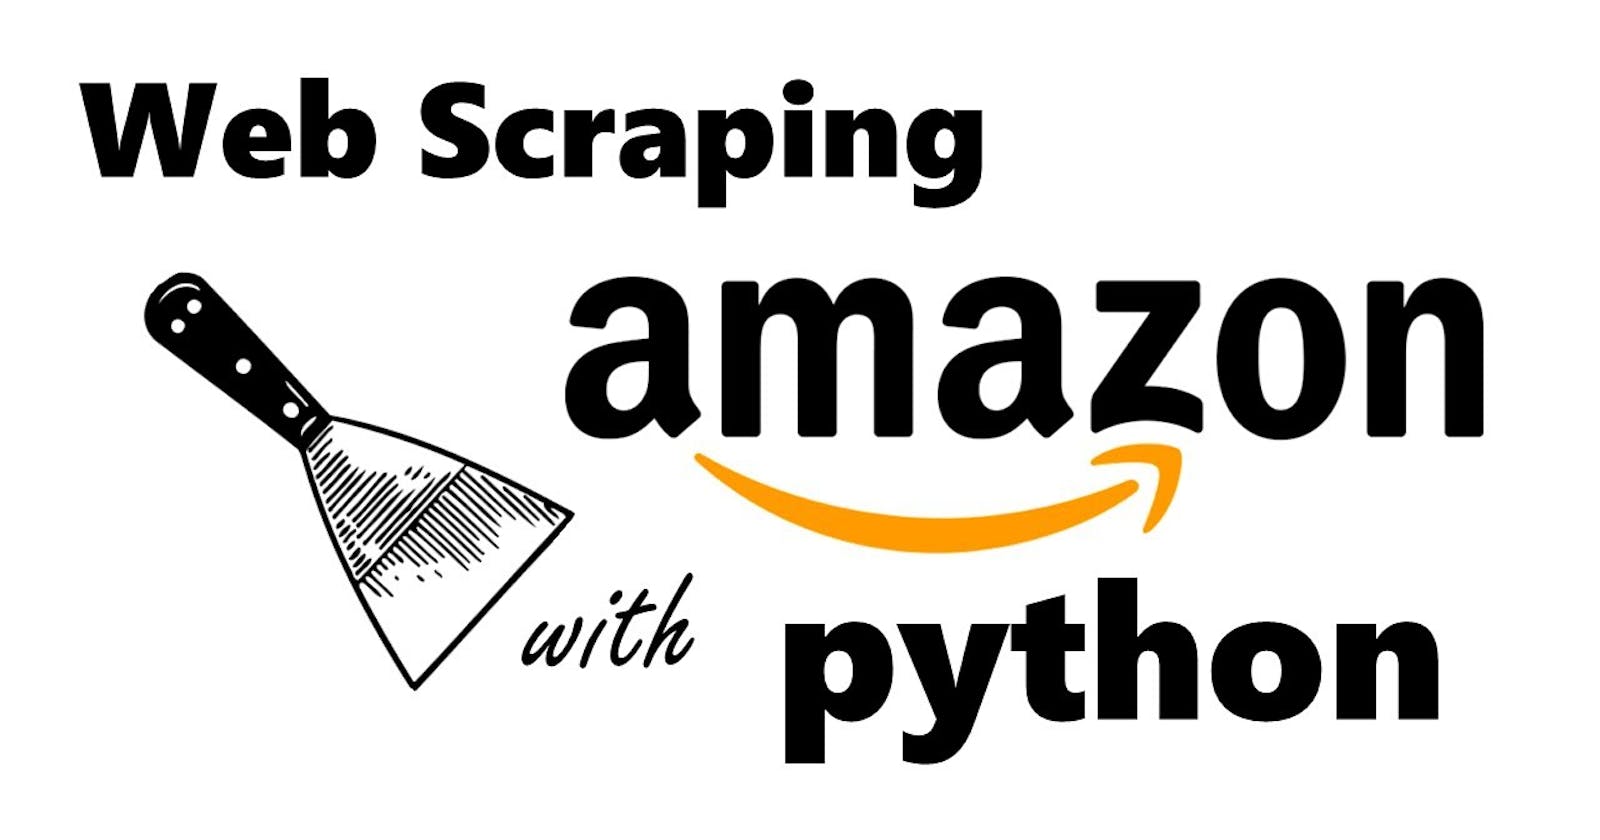 Scraping Amazon web page using Selenium